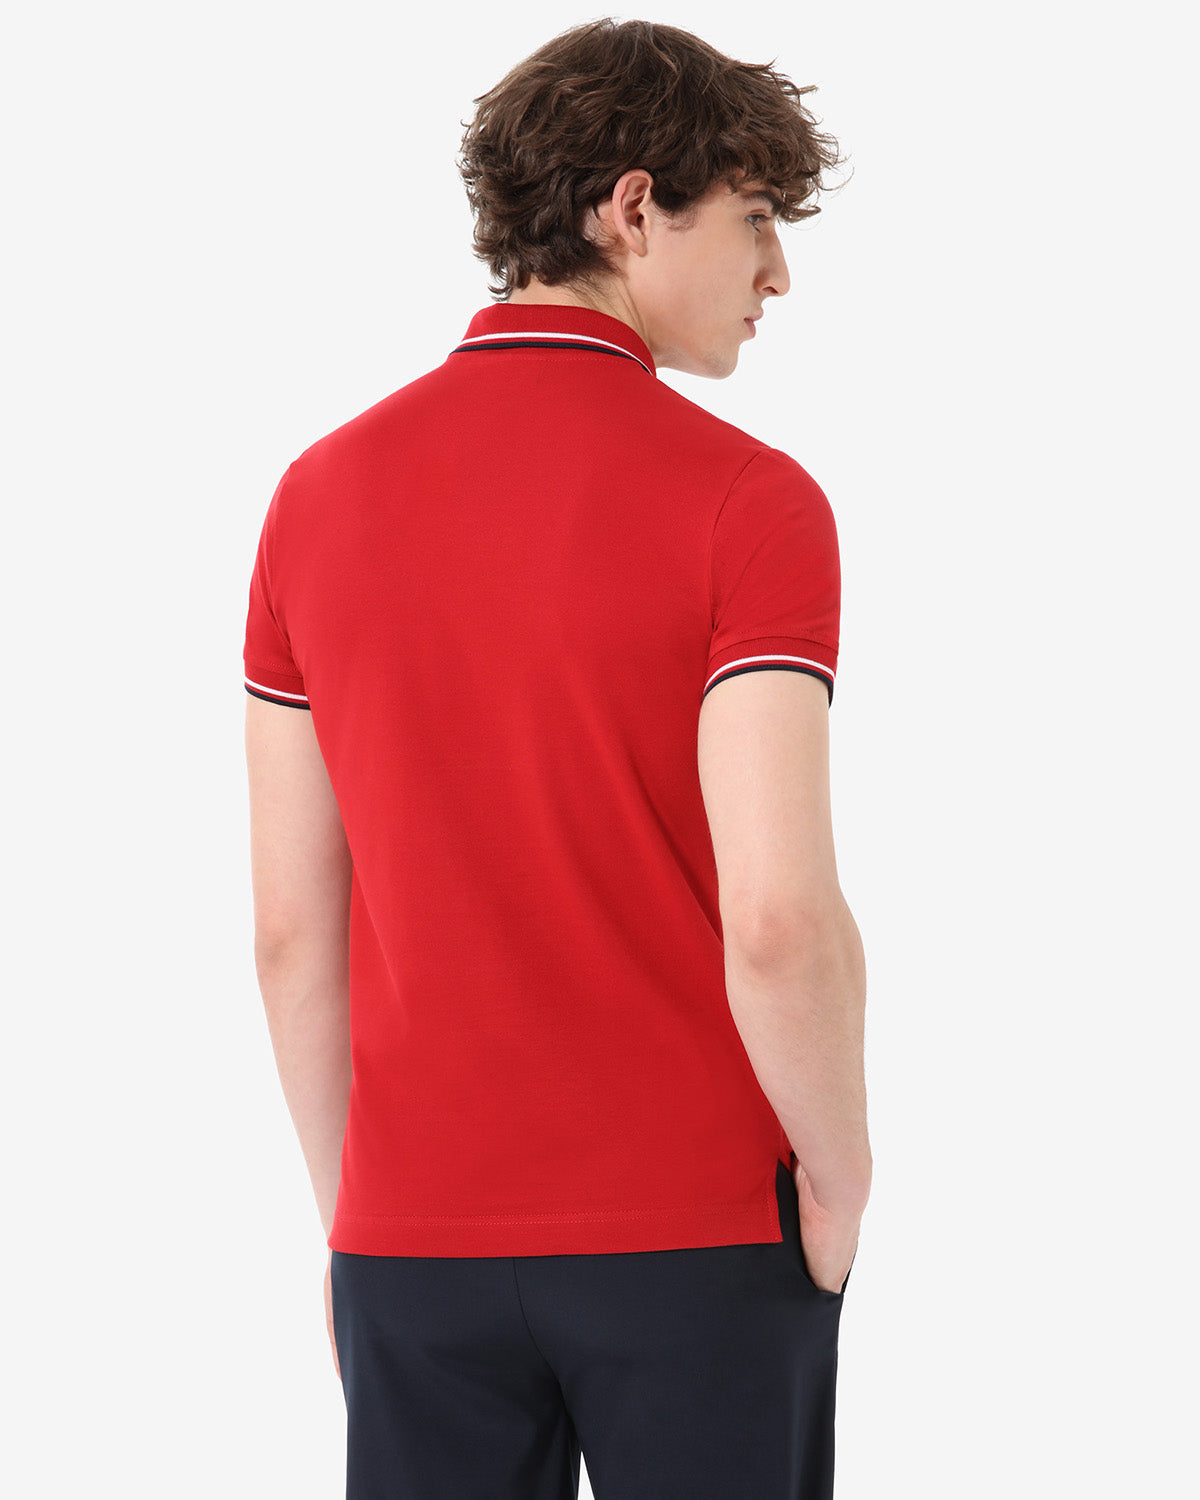 Piqué Polo Shirt: Australian Sportswear